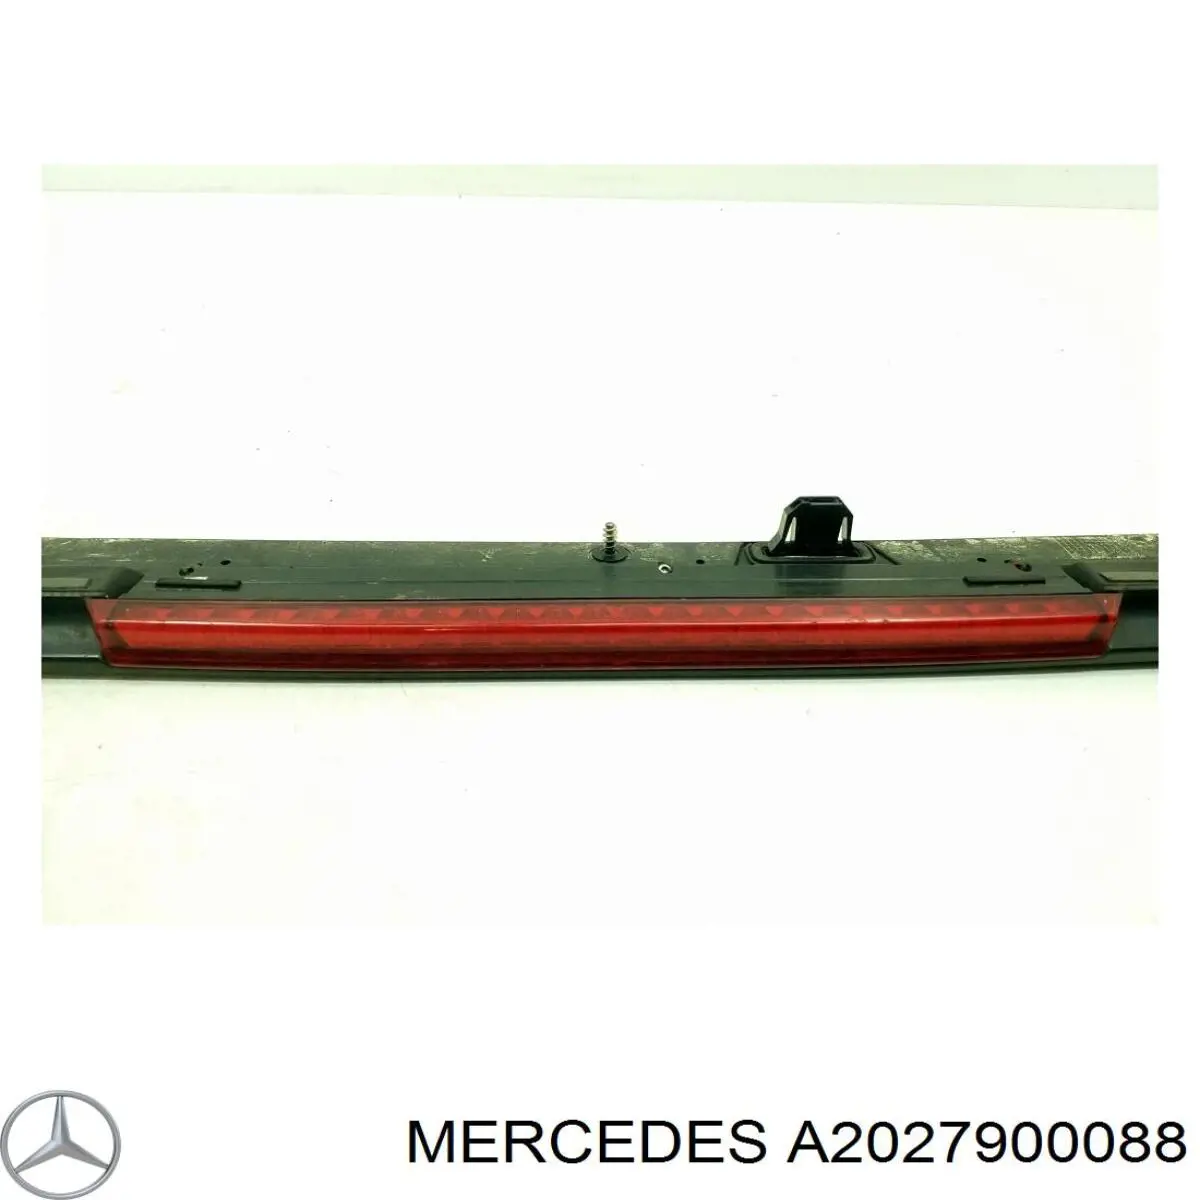 A2027900088 Mercedes alerón